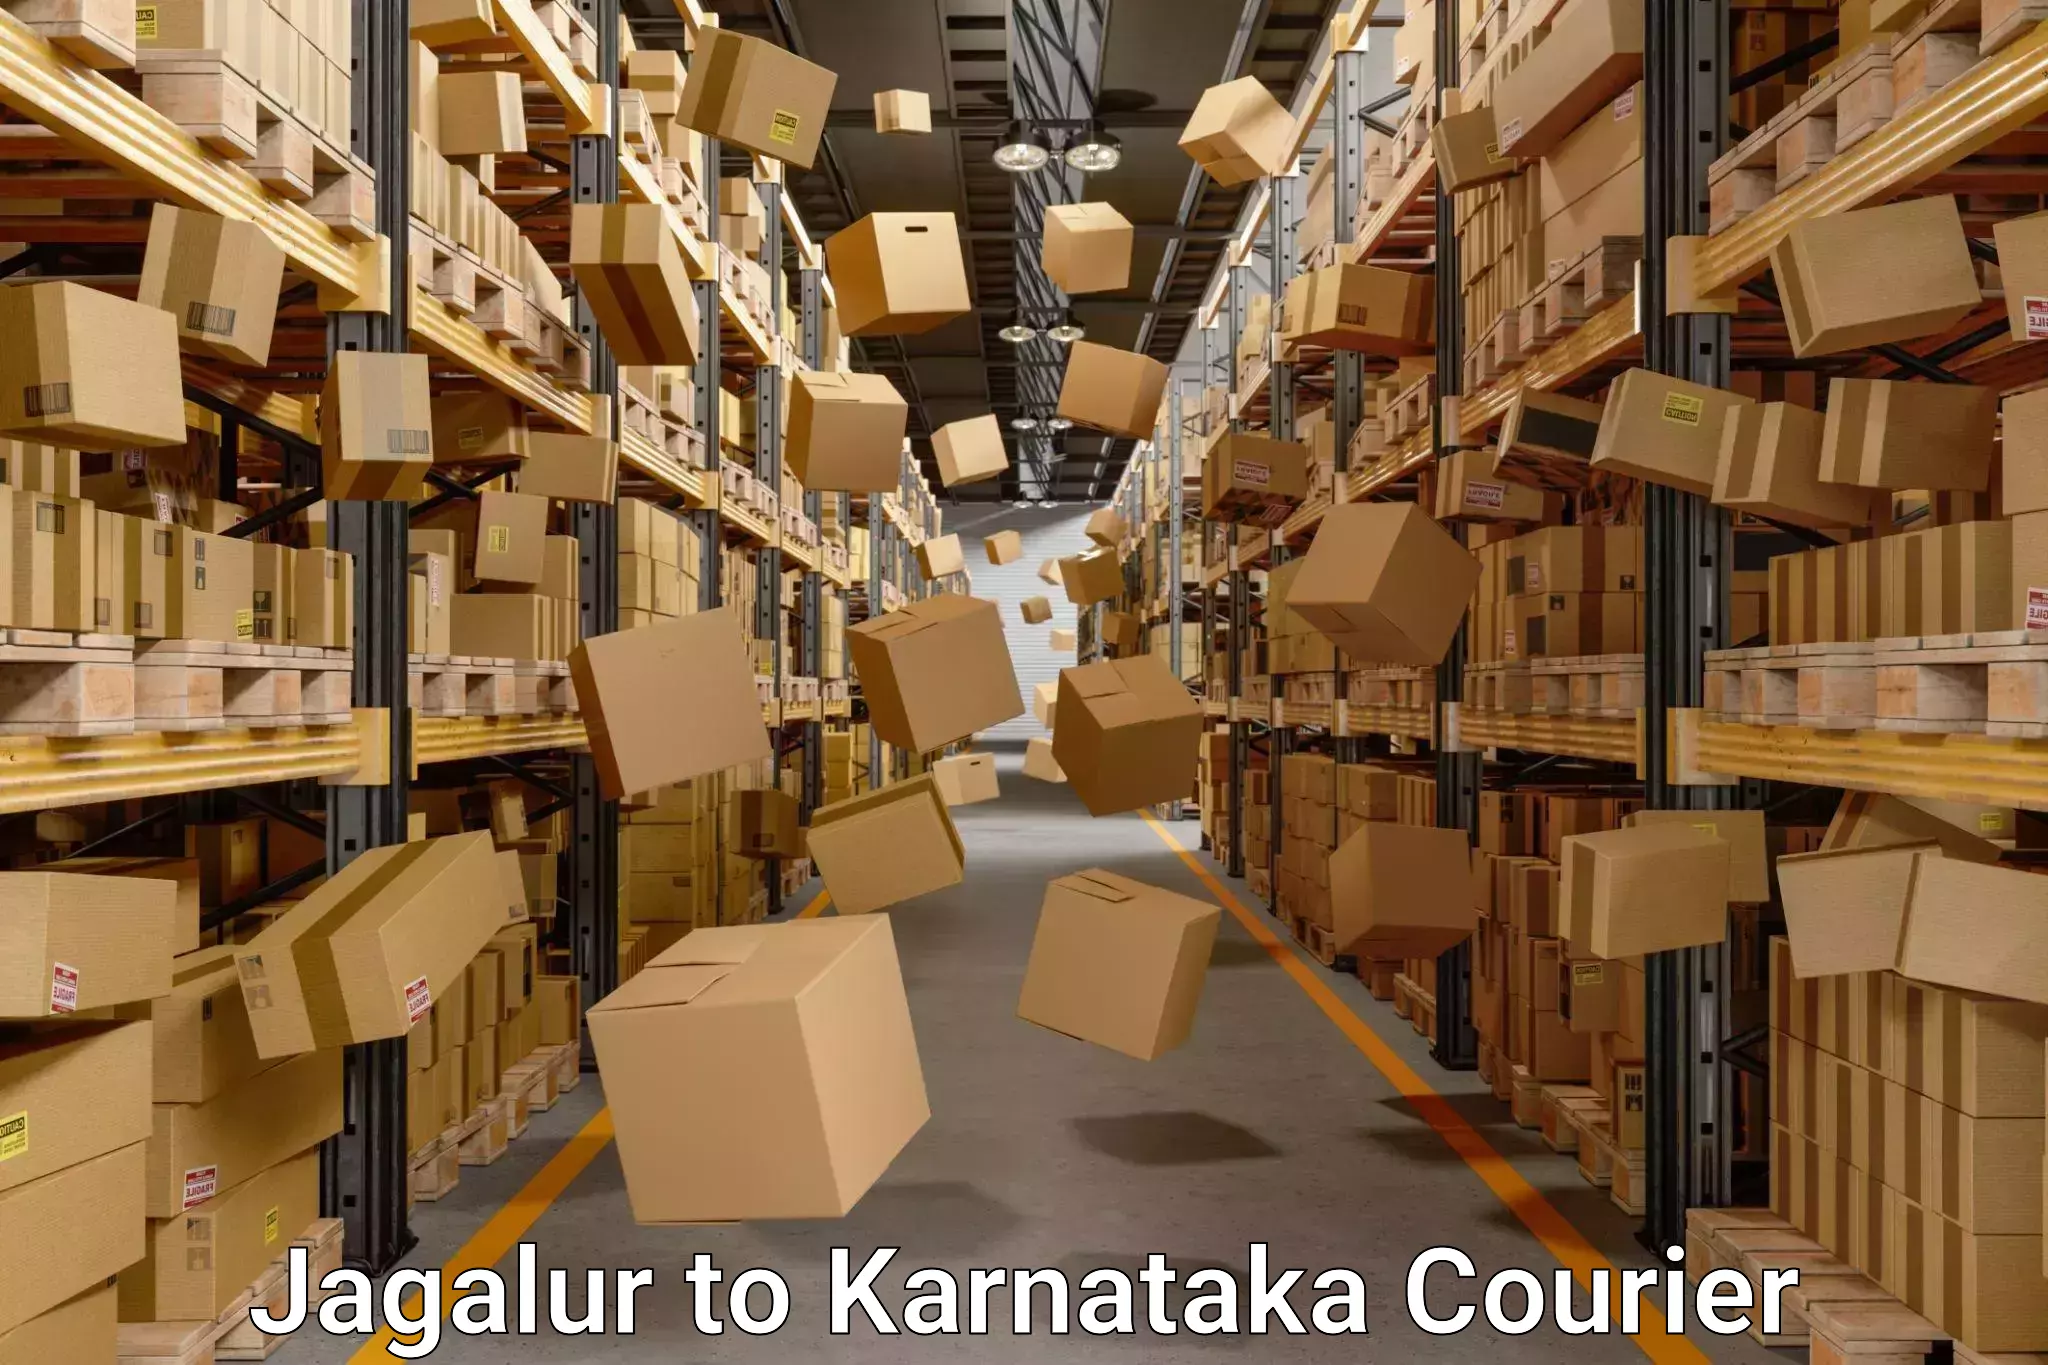 Trusted moving company Jagalur to Karnataka